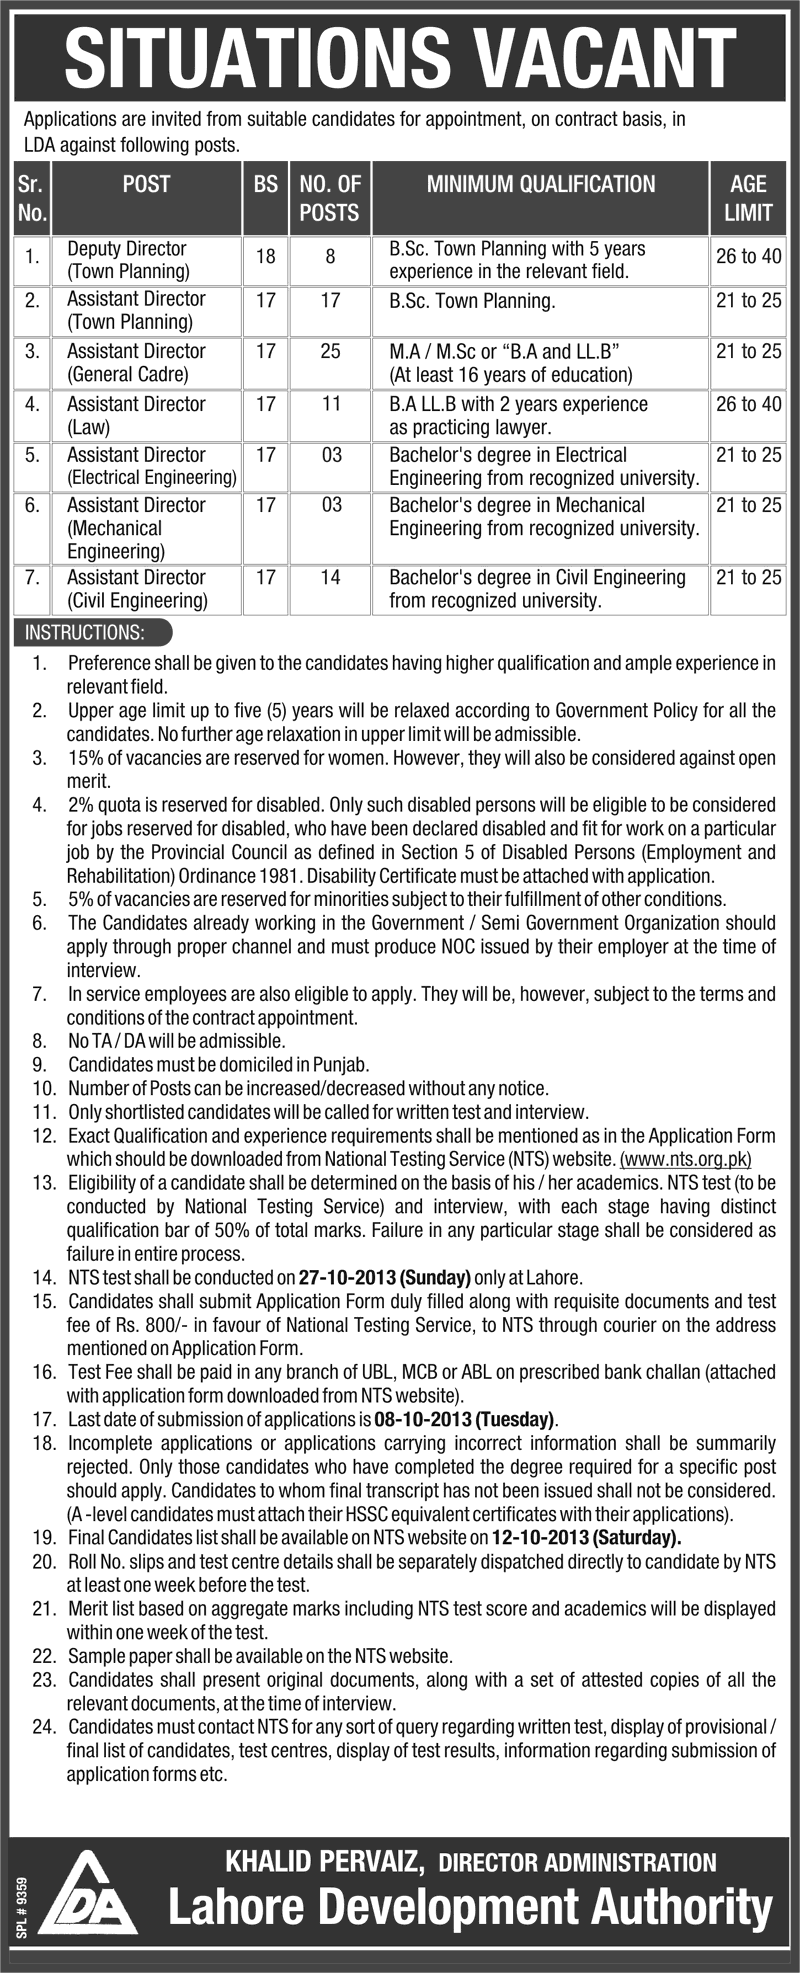 Lahore Development Authority (LDA) Jobs 2013 September for Deputy / Assistant Directors Application Form Download